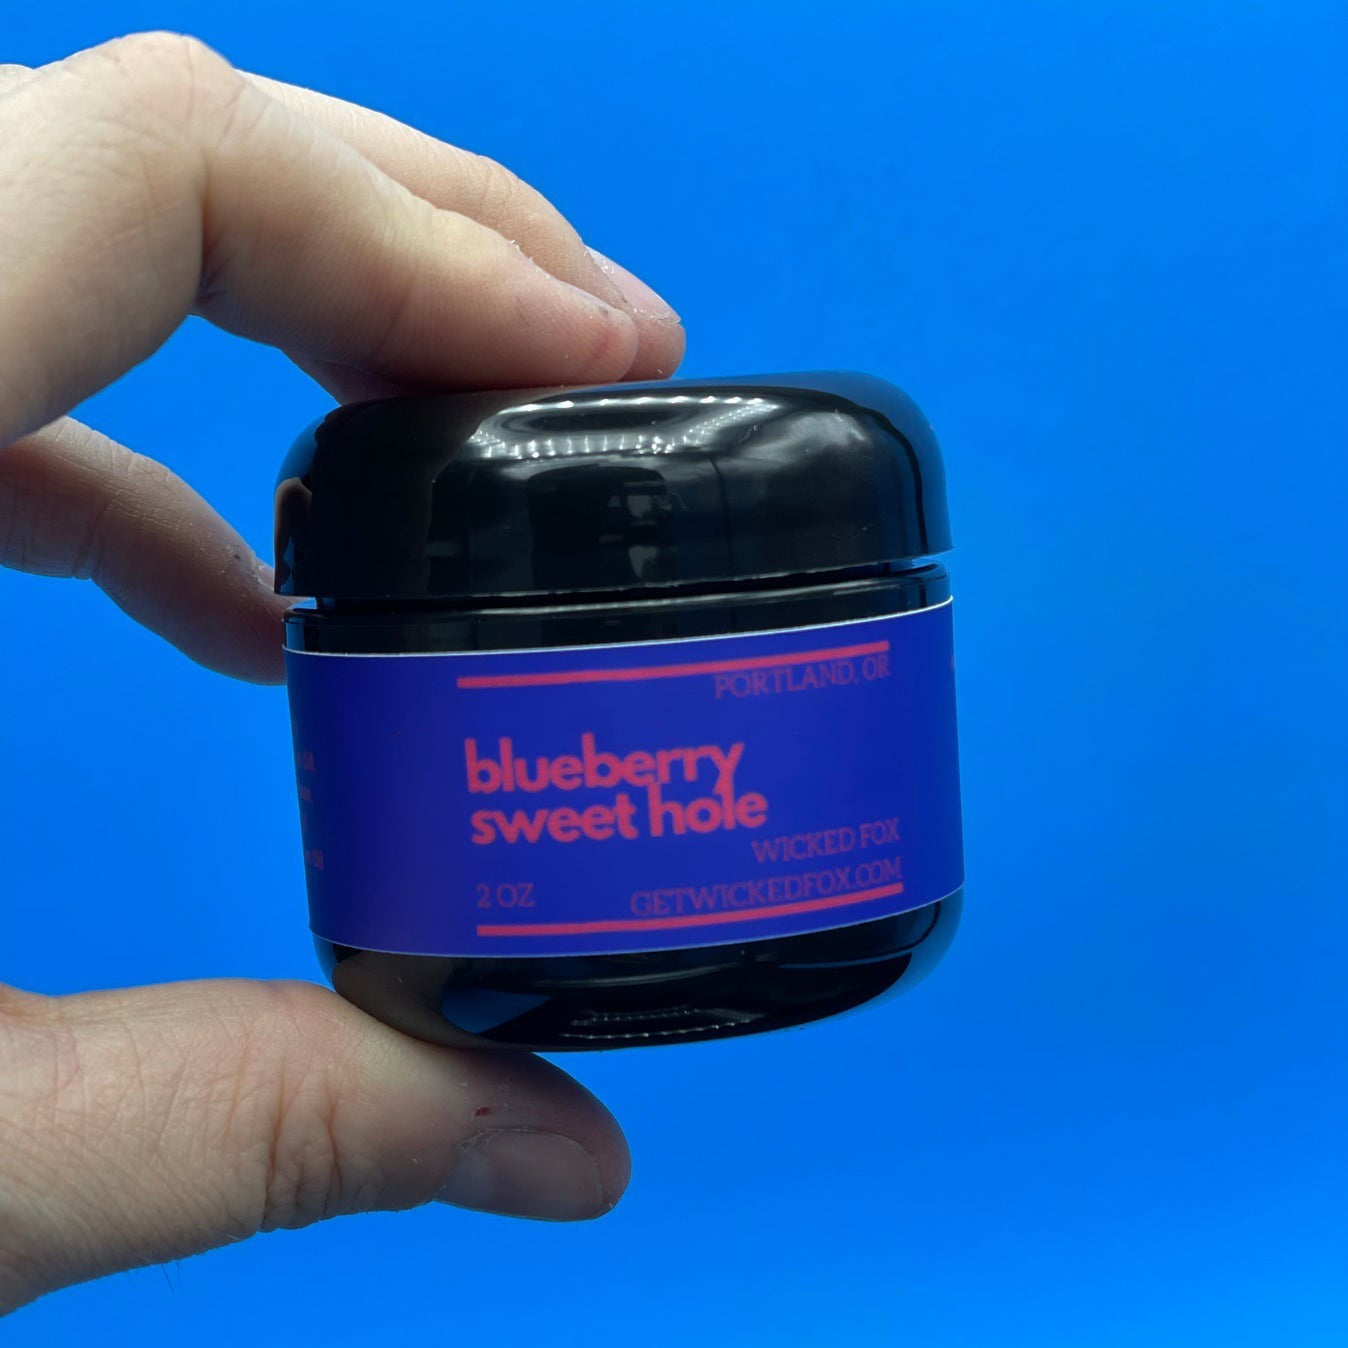 Wicked Fox - Blueberry Sweet Hole